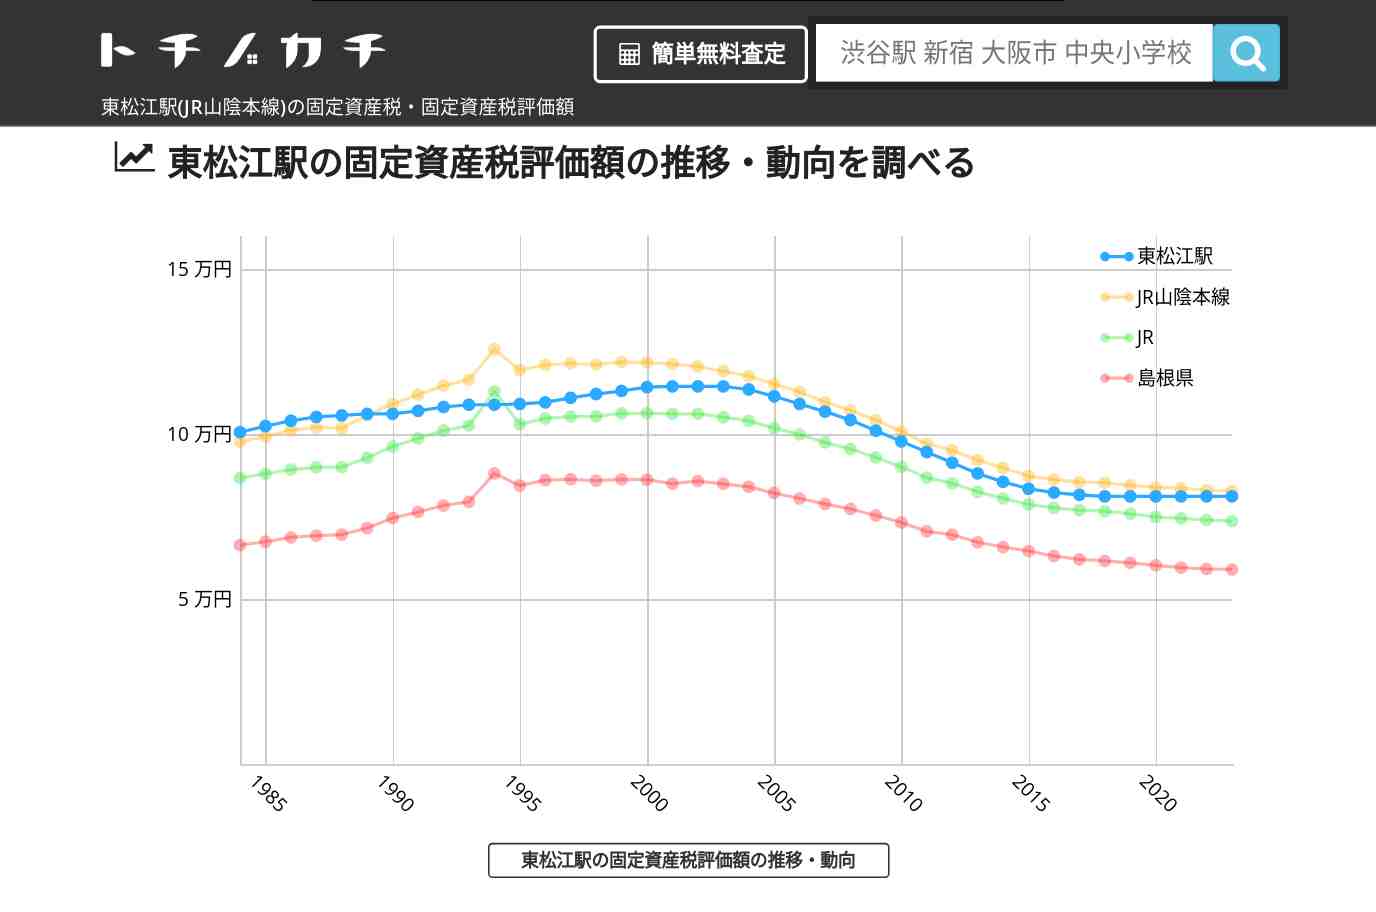 東松江駅(JR山陰本線)の固定資産税・固定資産税評価額 | トチノカチ